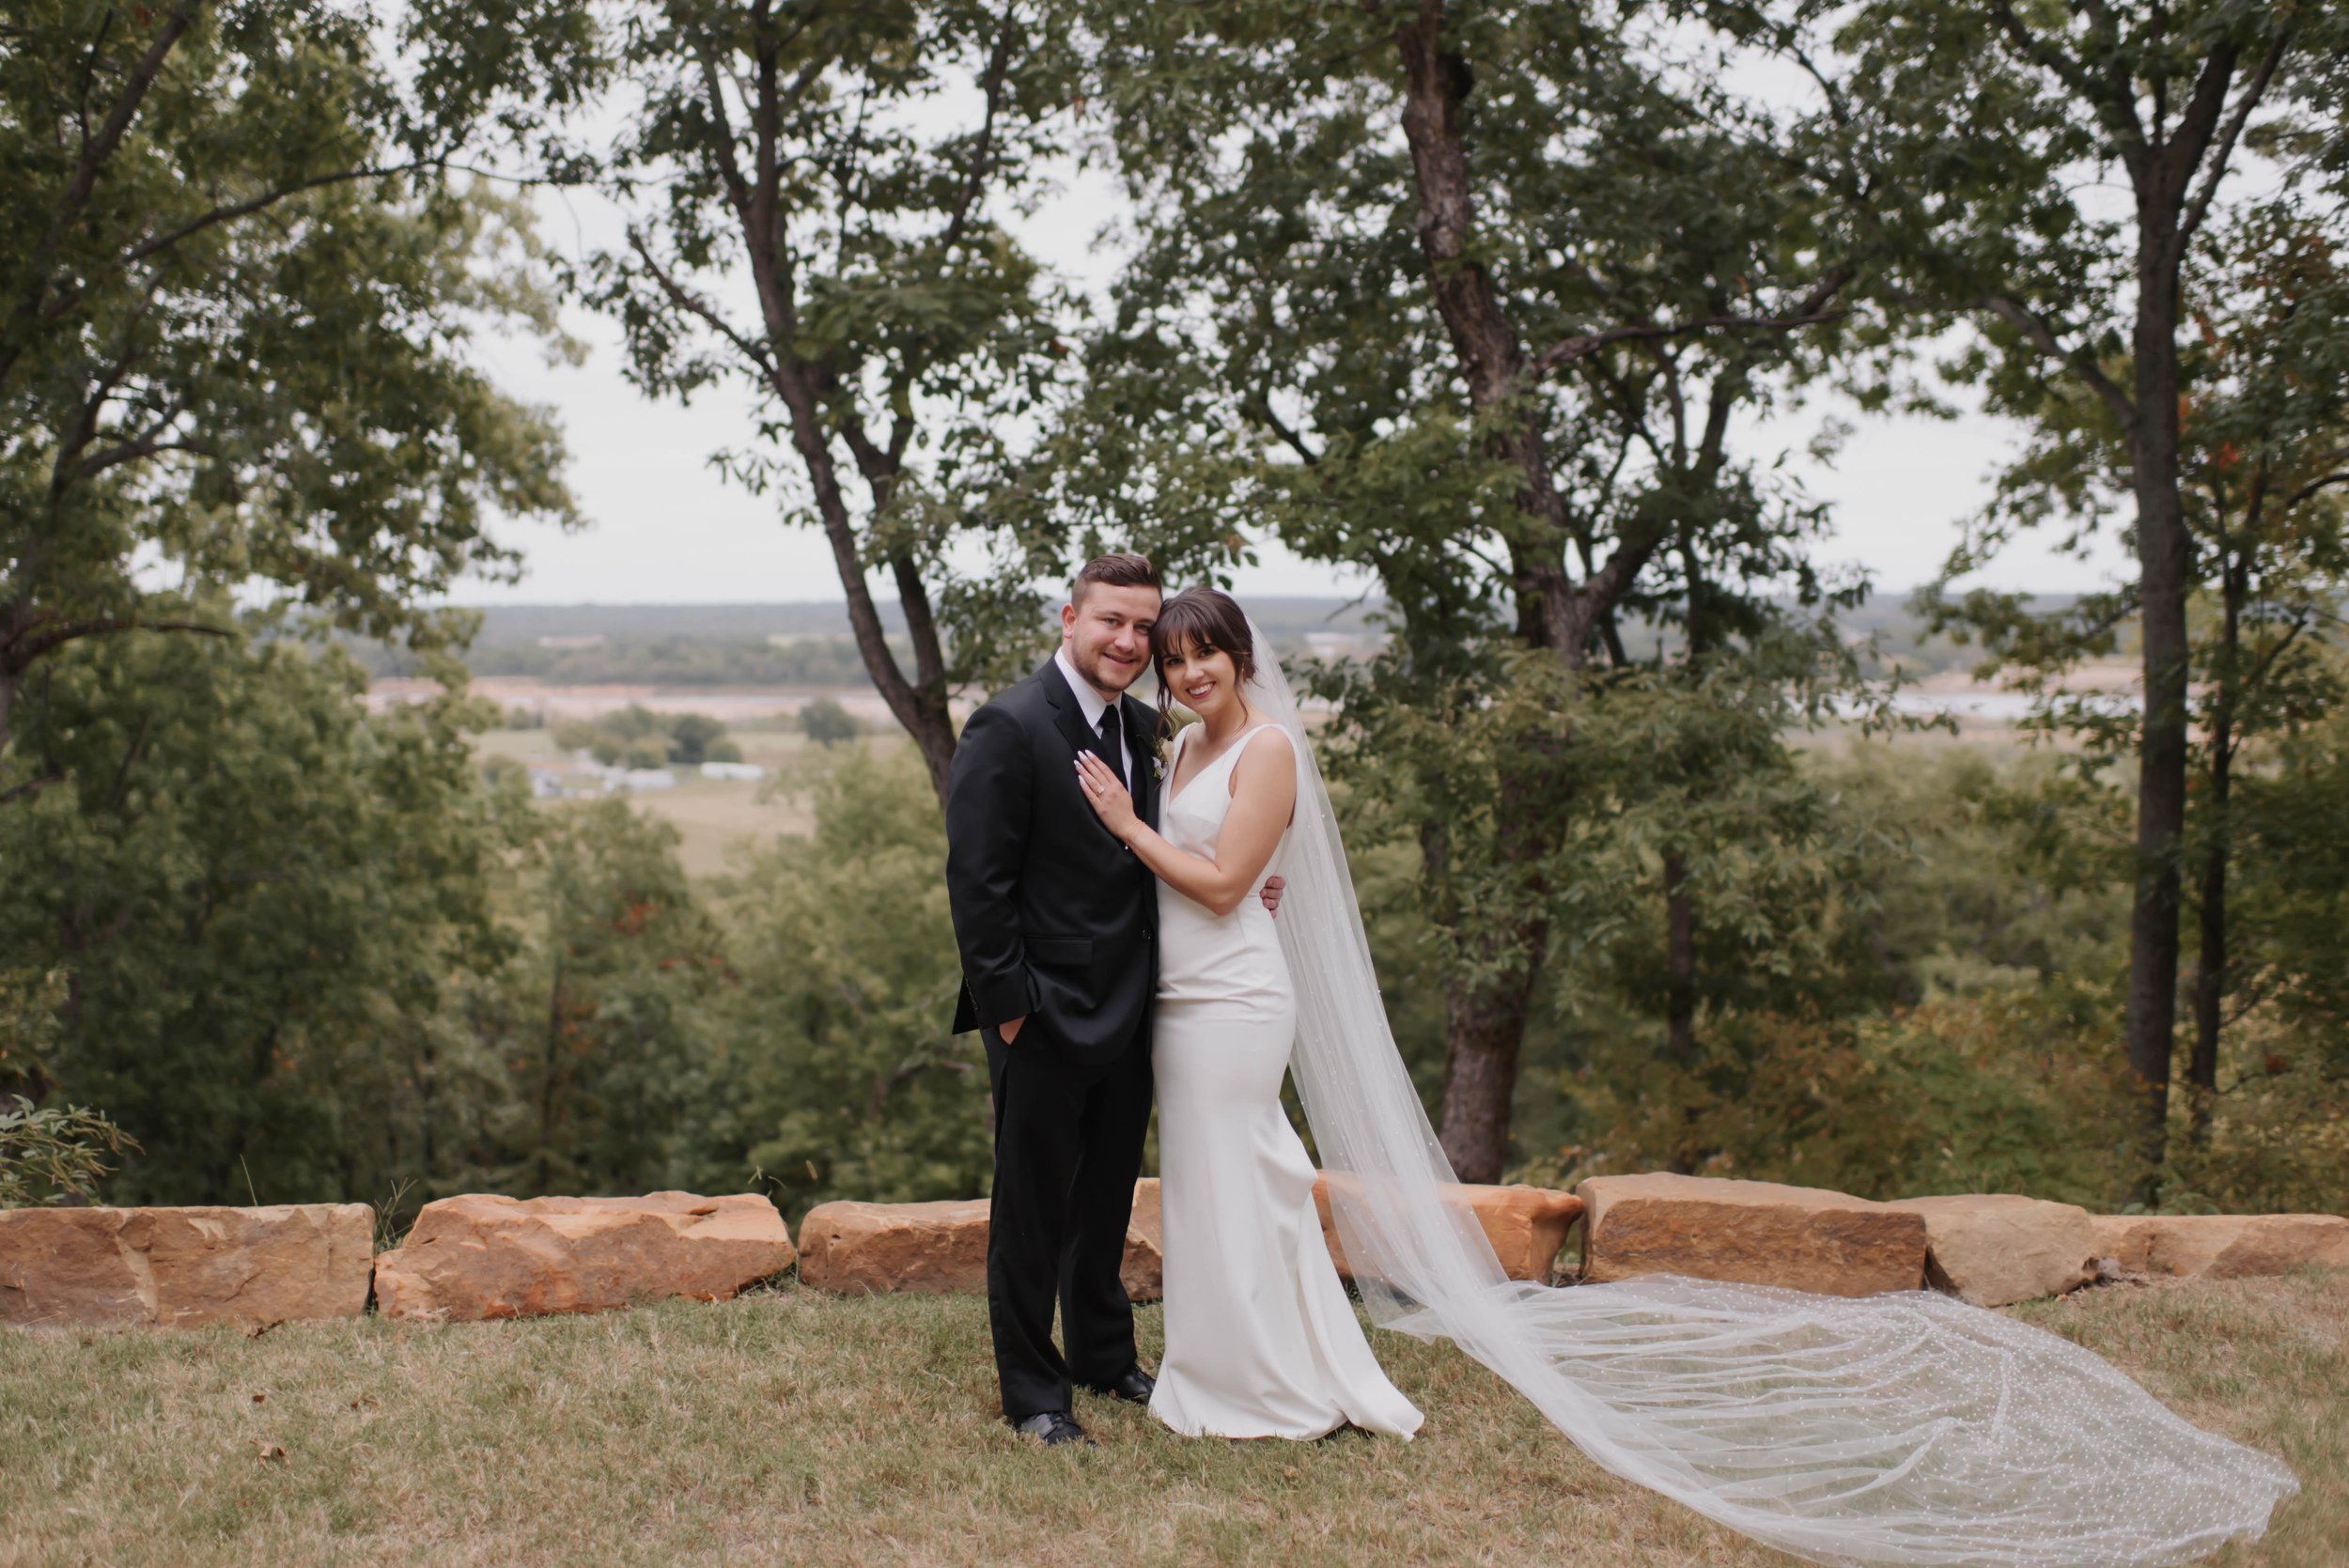 Riverbend Chapel at Dream Point Ranch Tulsa Jenks Bixby Broken Arrow Oklahoma Weddings (51).jpg